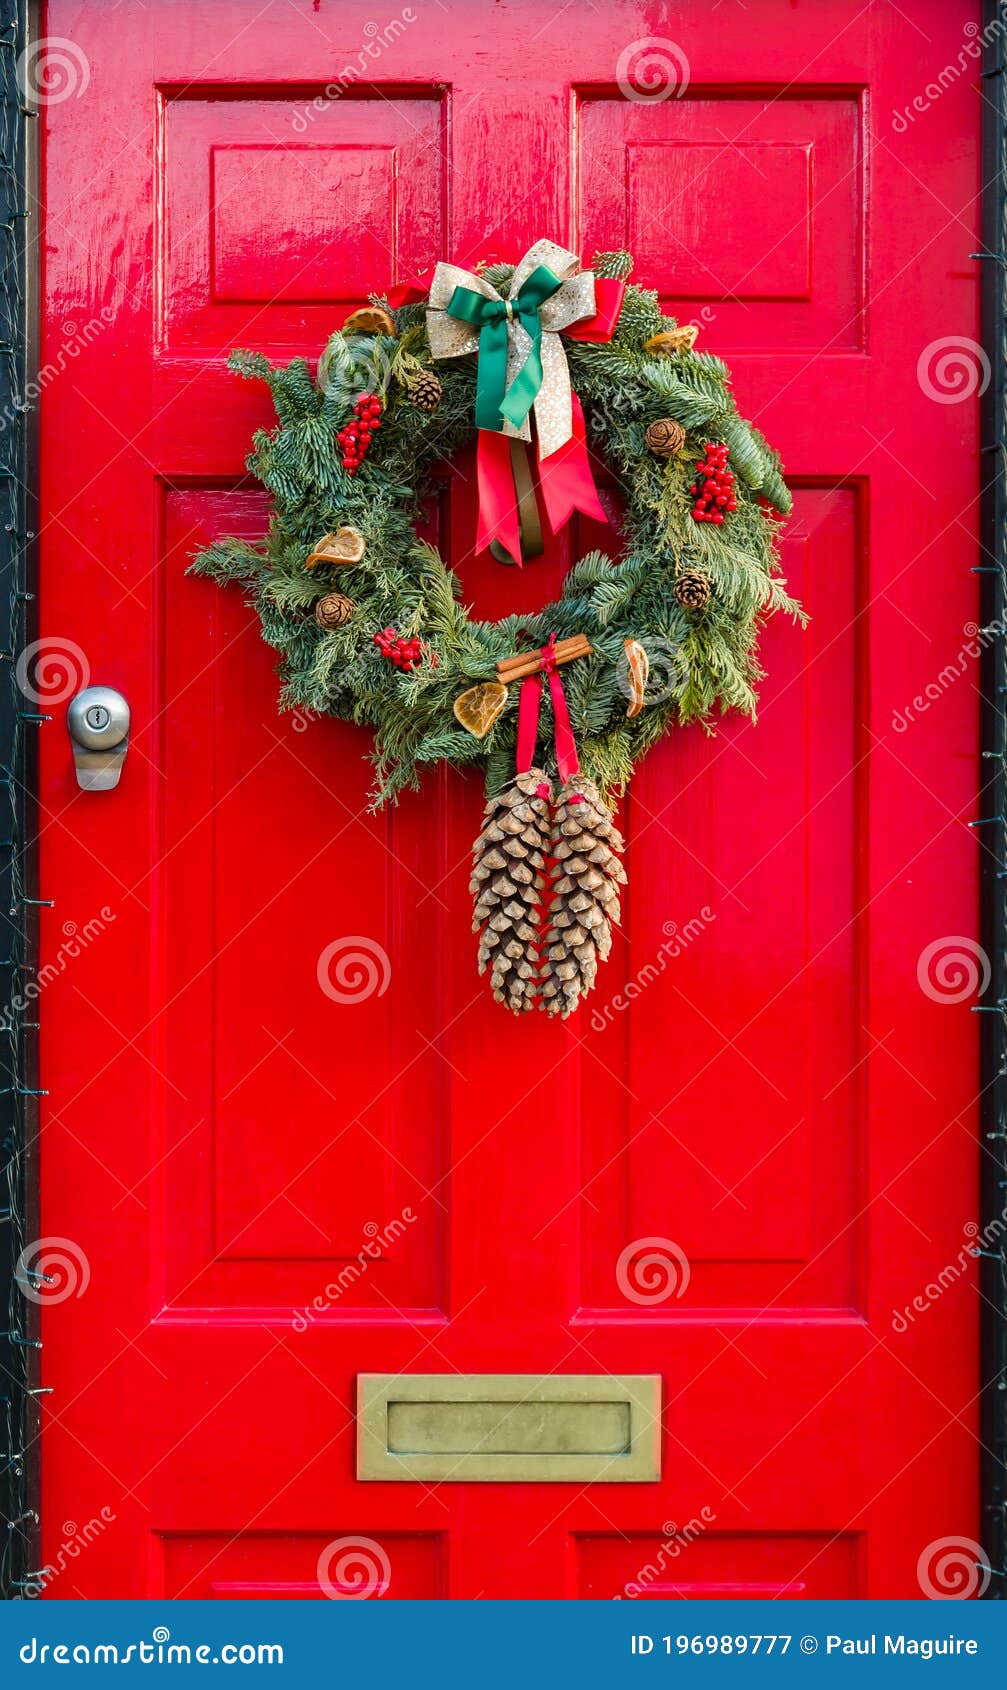 1,137 Christmas Uk House Stock Photos - Free & Royalty-Free Stock ...